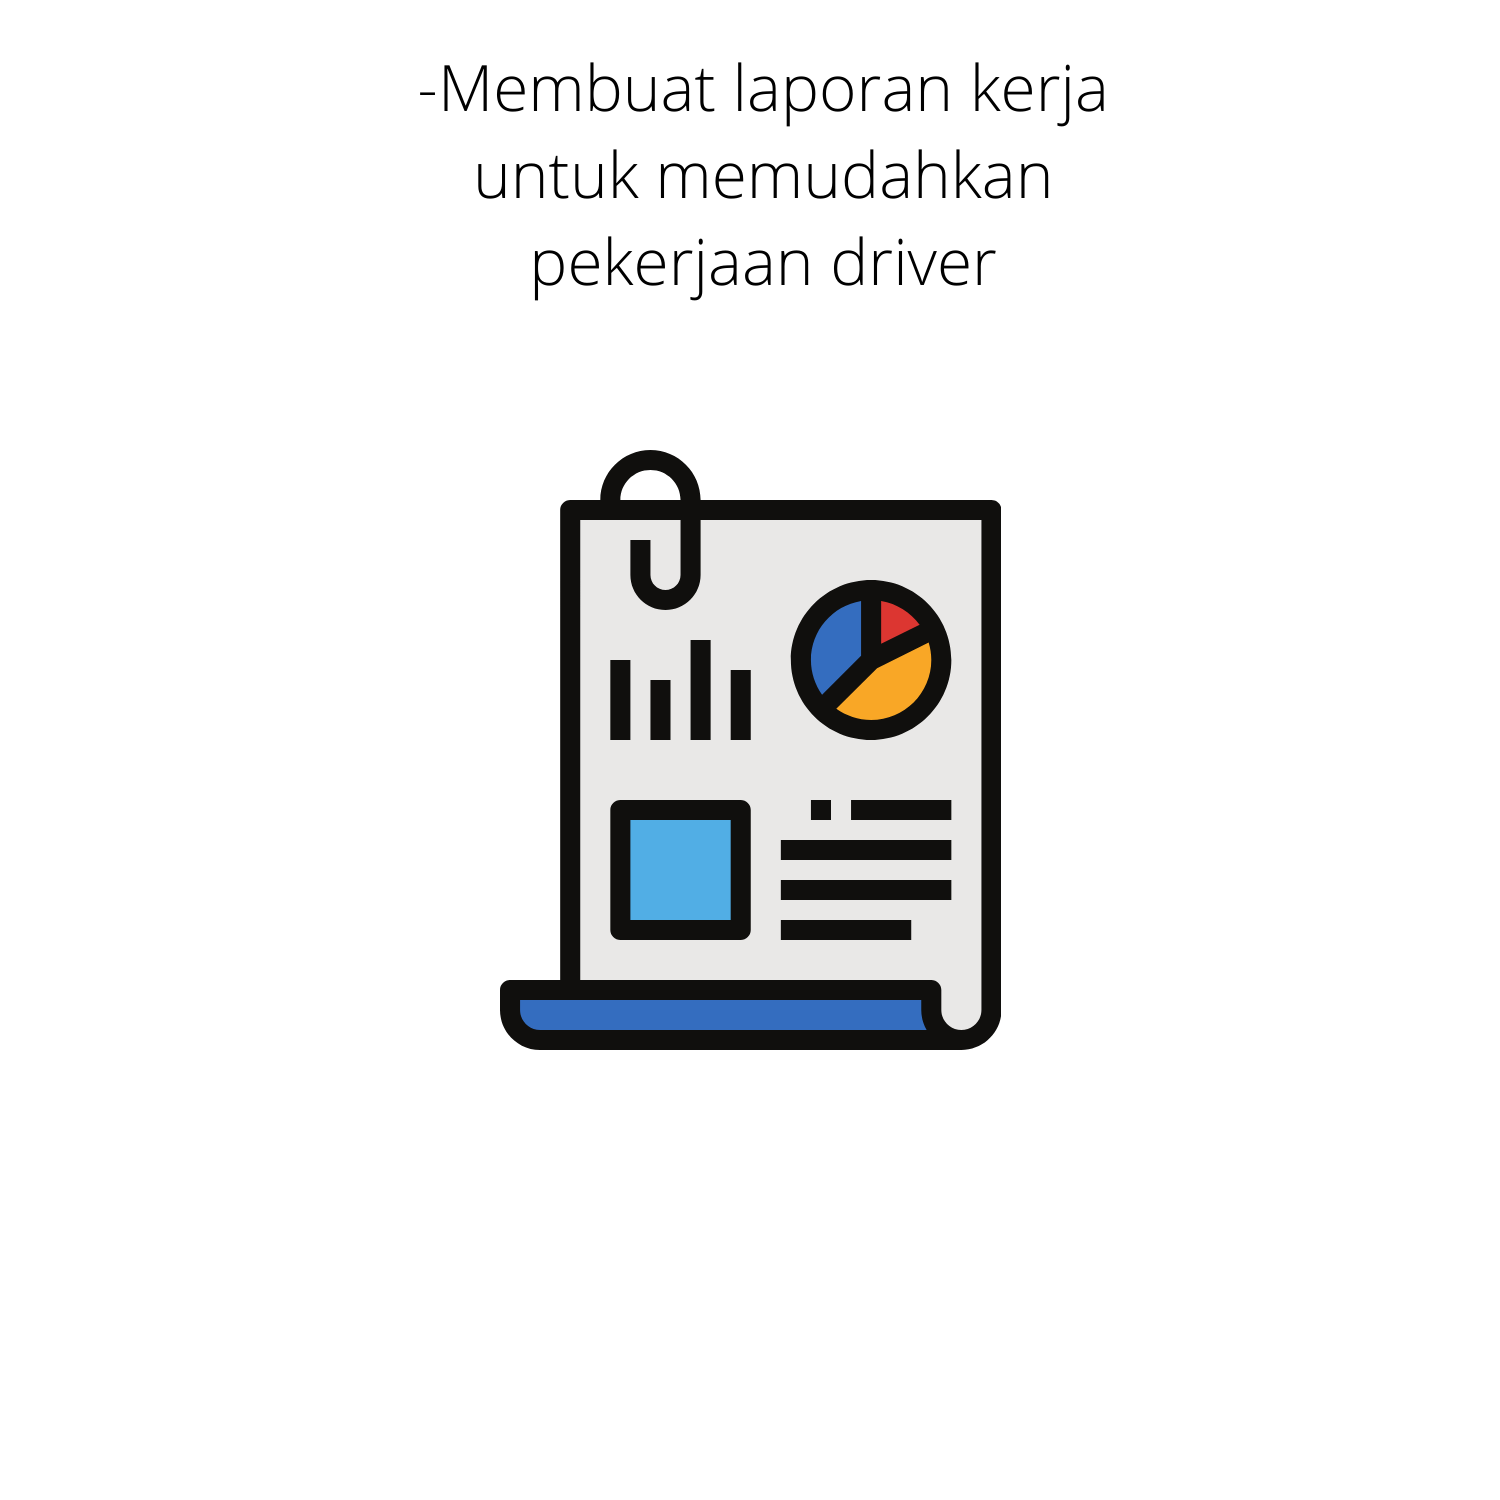 Driver Application